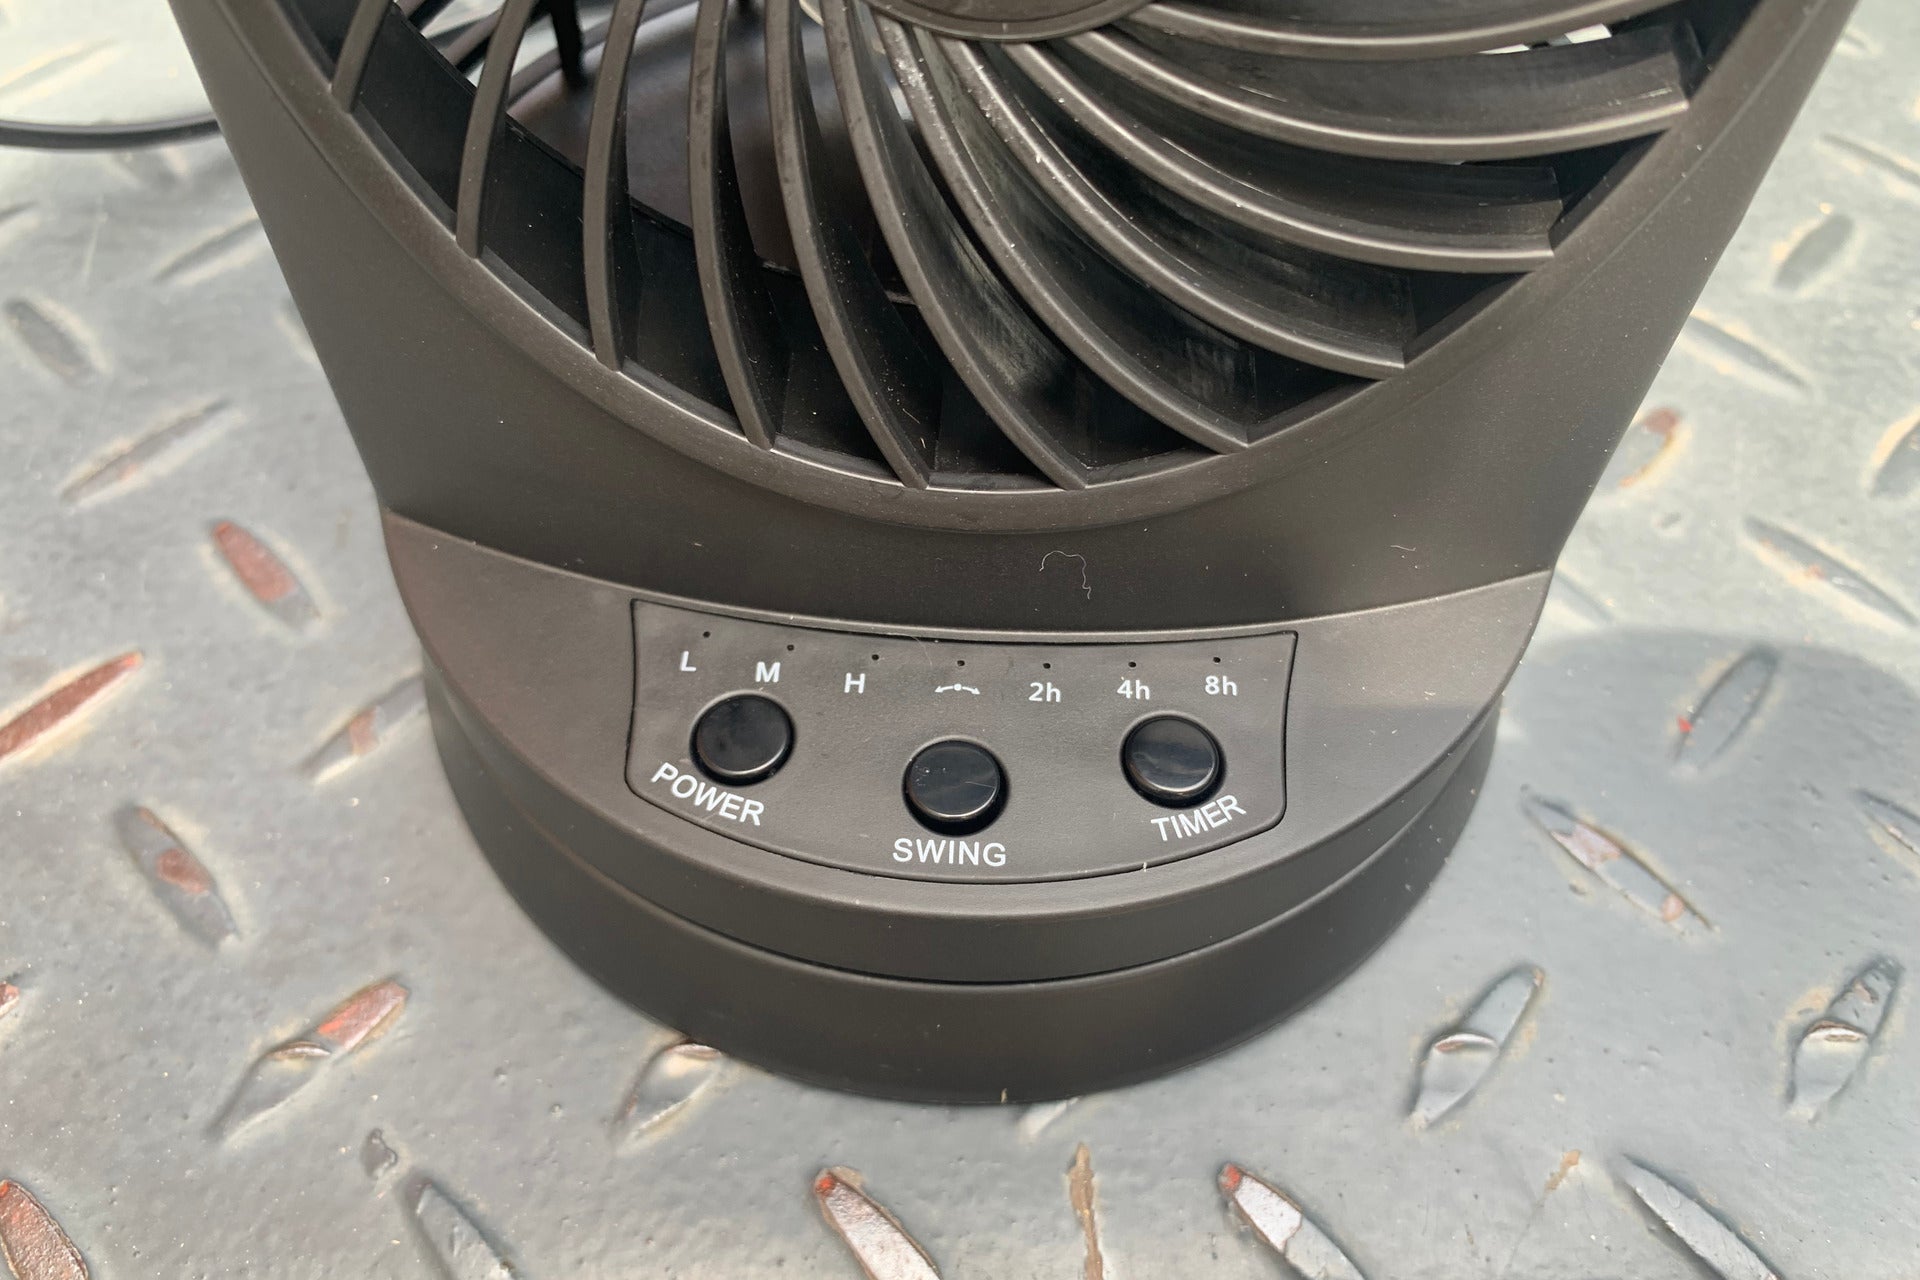 Dr. Prepare 13-inch Dual Oscillating Tower Fan controls